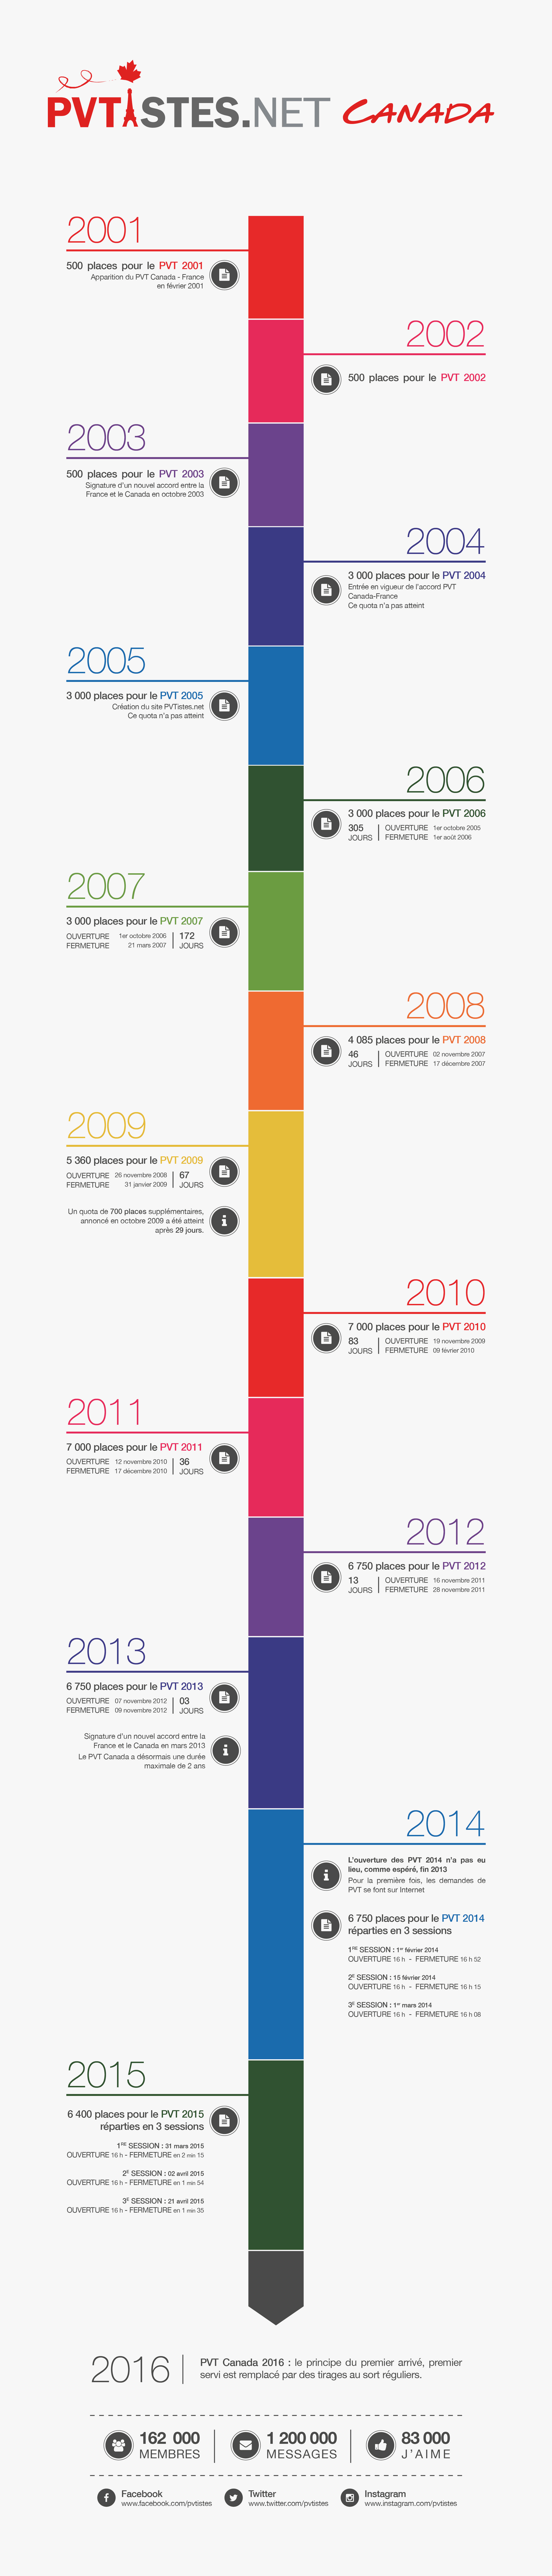 Infographie PVT Canada de 2001 a 2016